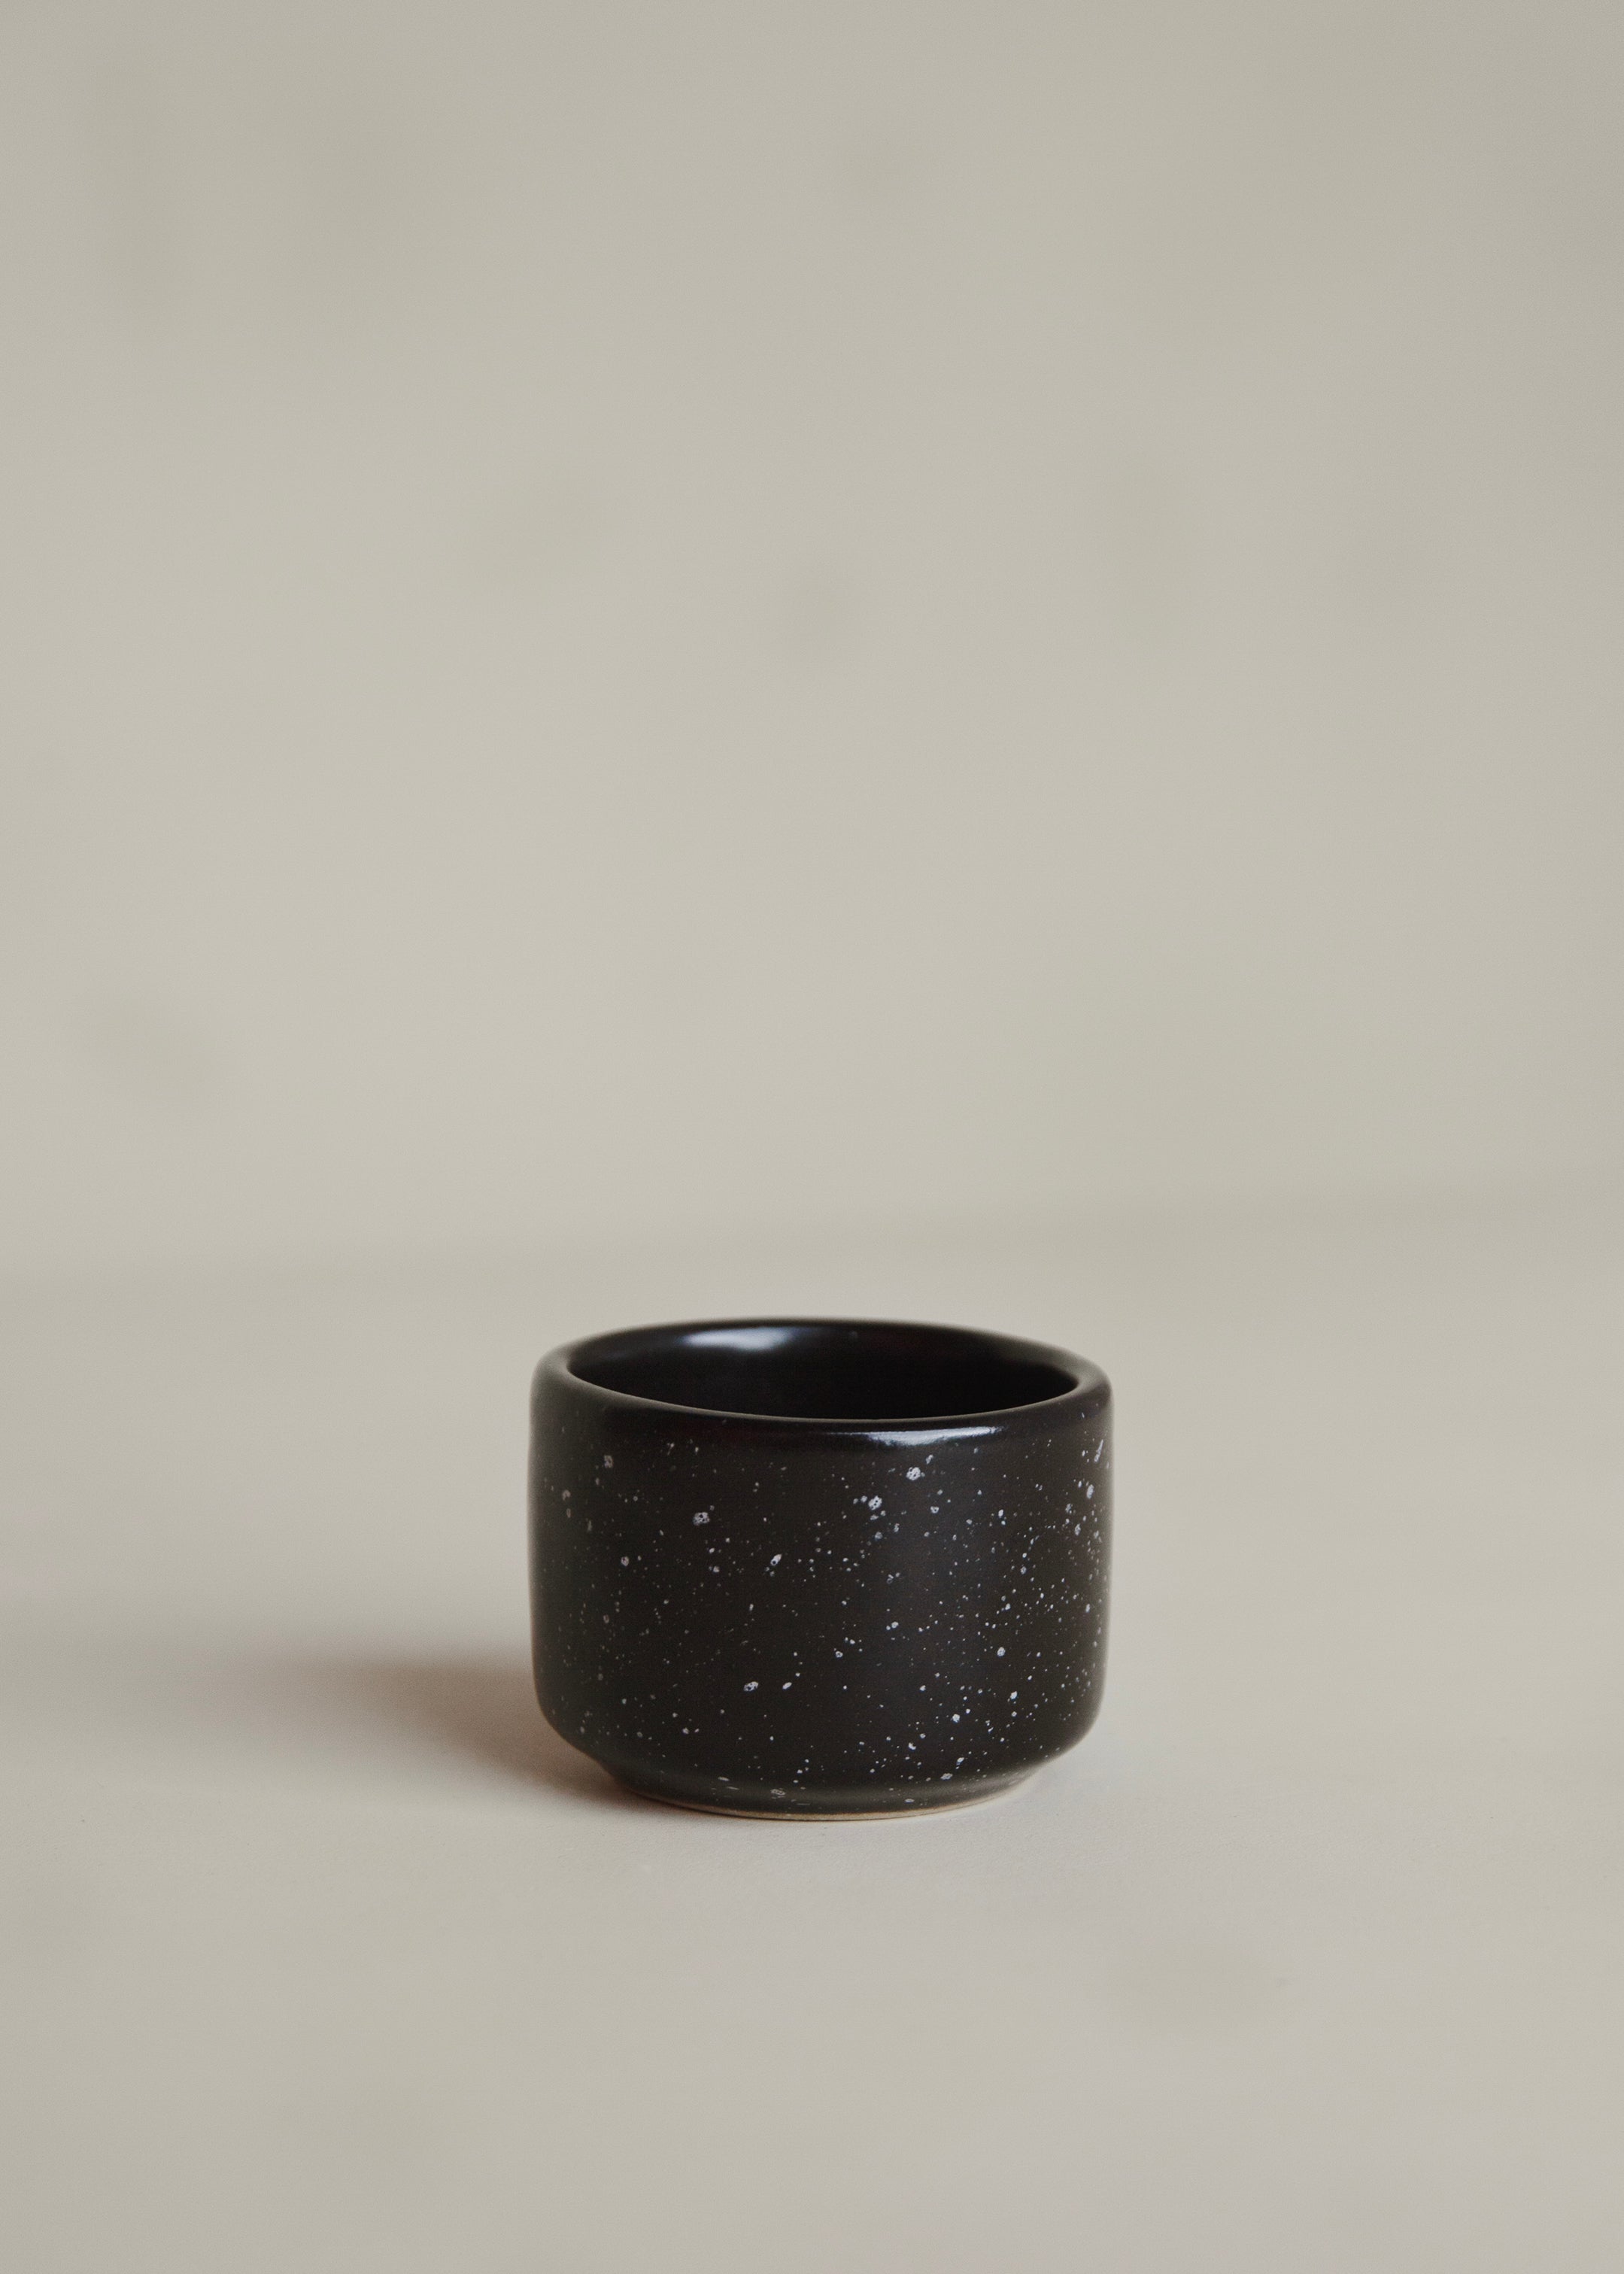 Tresna Espresso Cup / Speckled Black